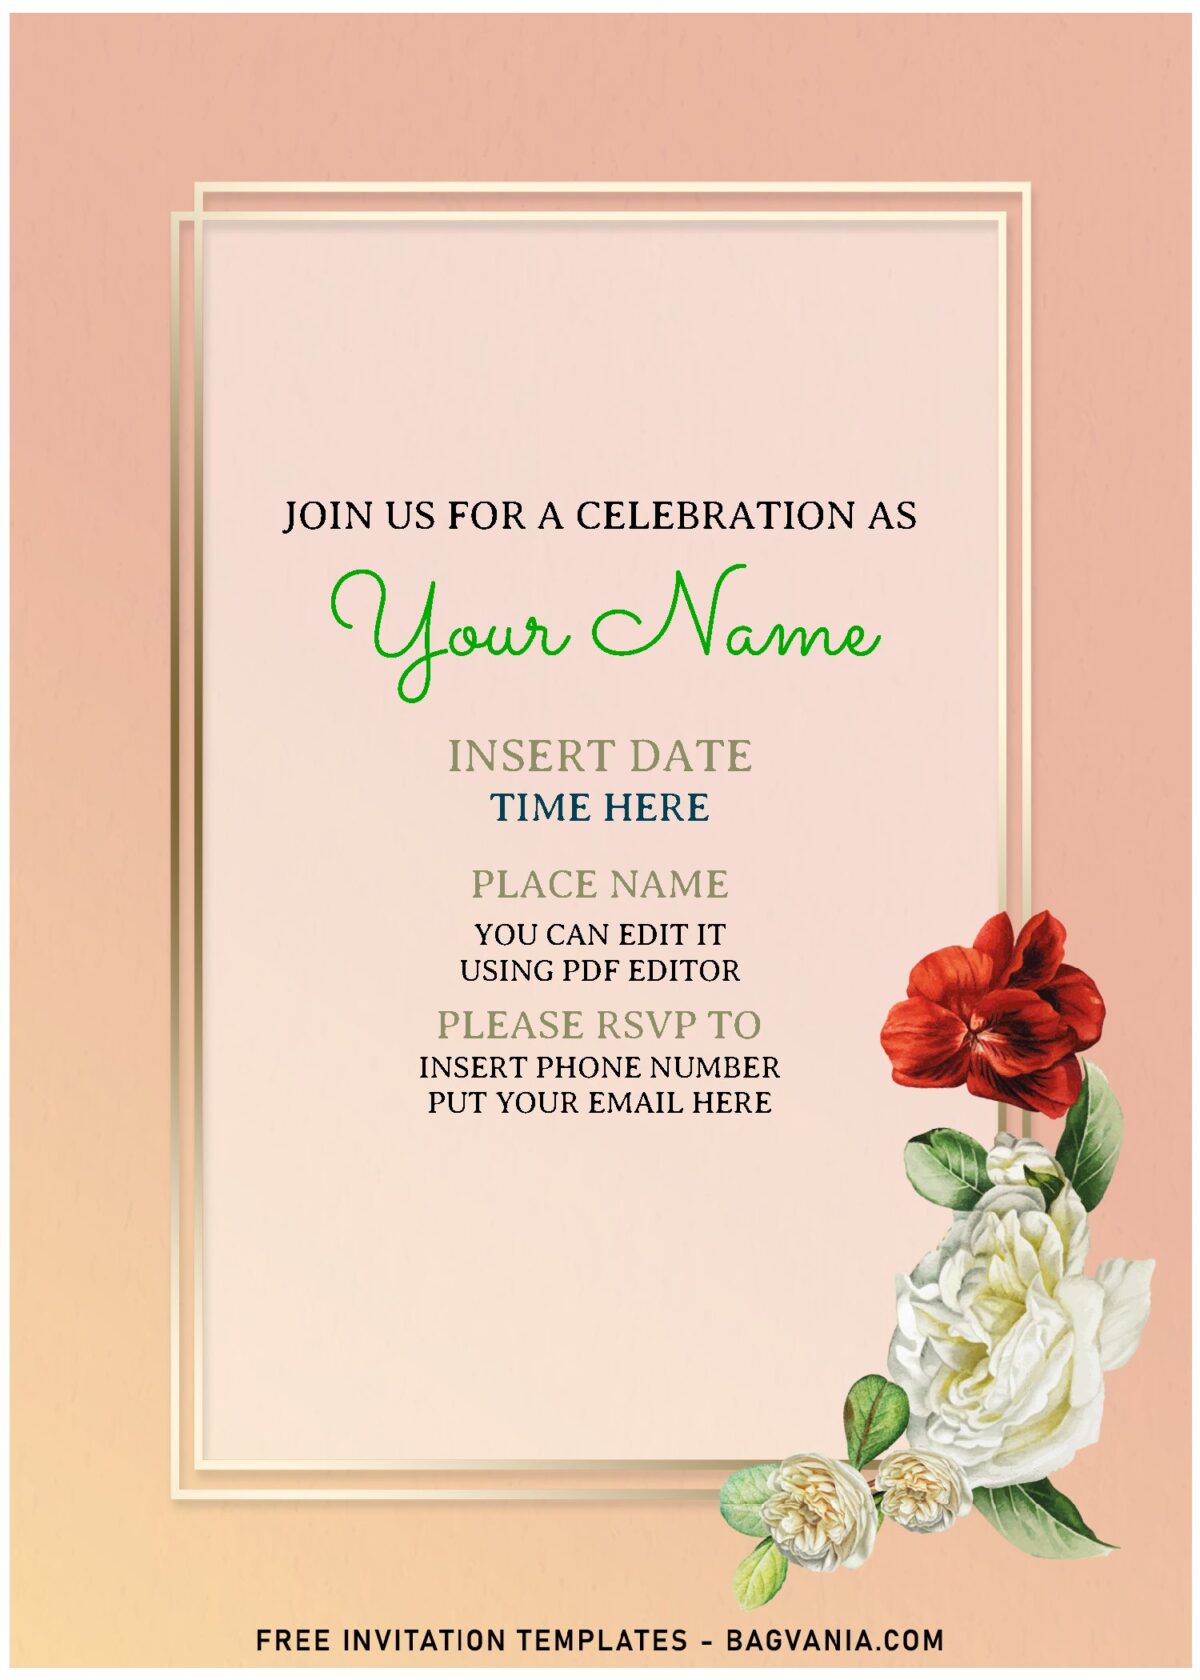 (Free Editable PDF) Rustic Watercolor Rose Birthday Invitation Templates with elegant script